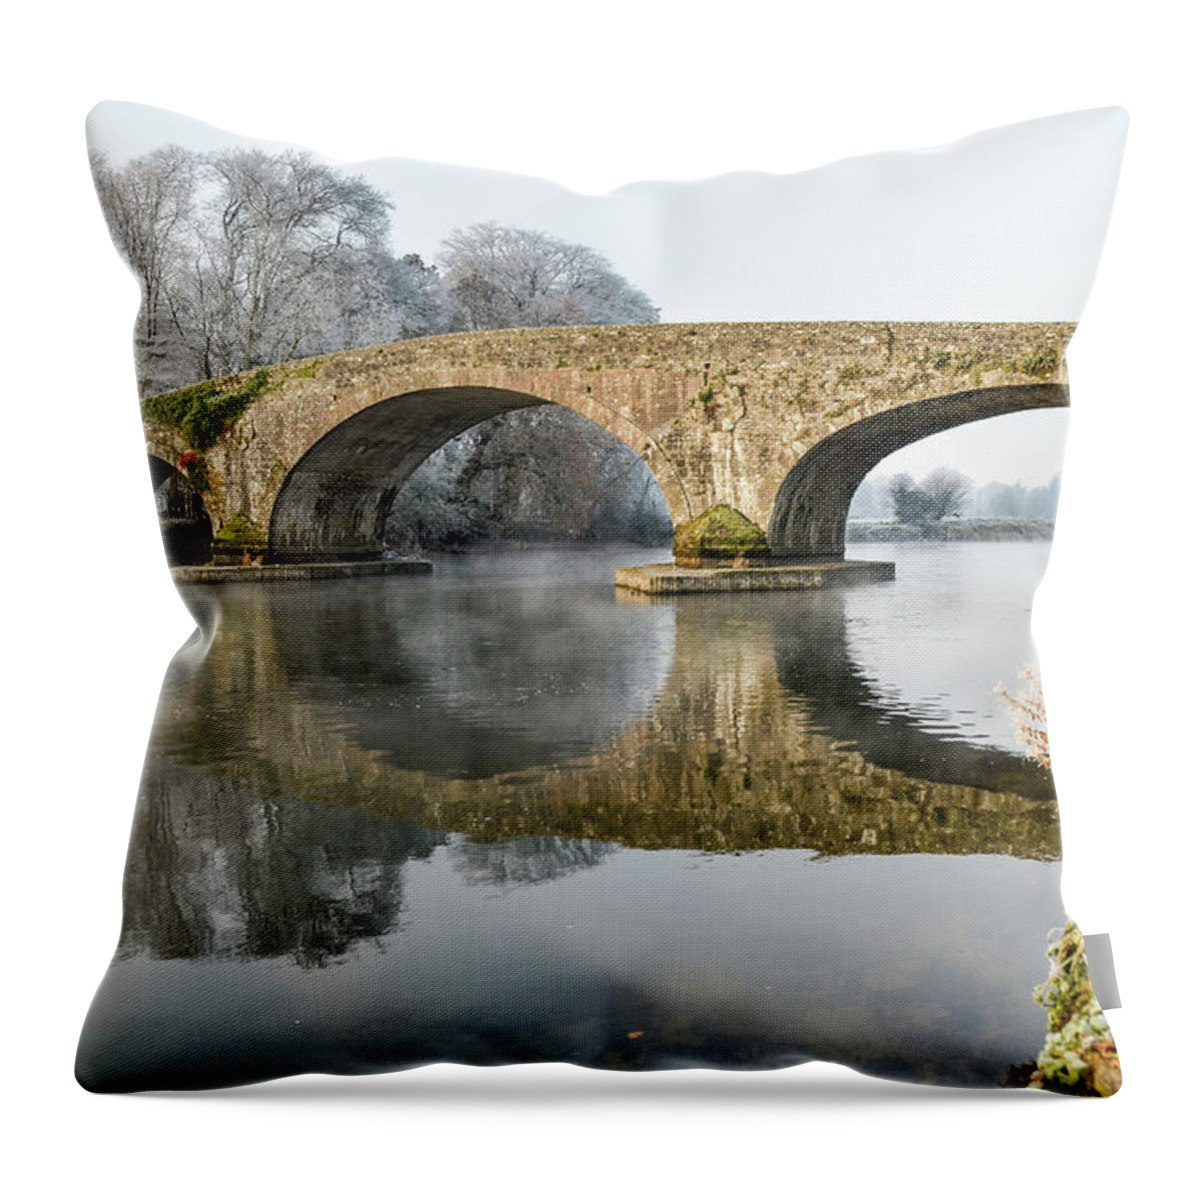 Bridge Throw Pillow featuring the photograph Kilsheelan Bridge in Winter by Joe Ormonde